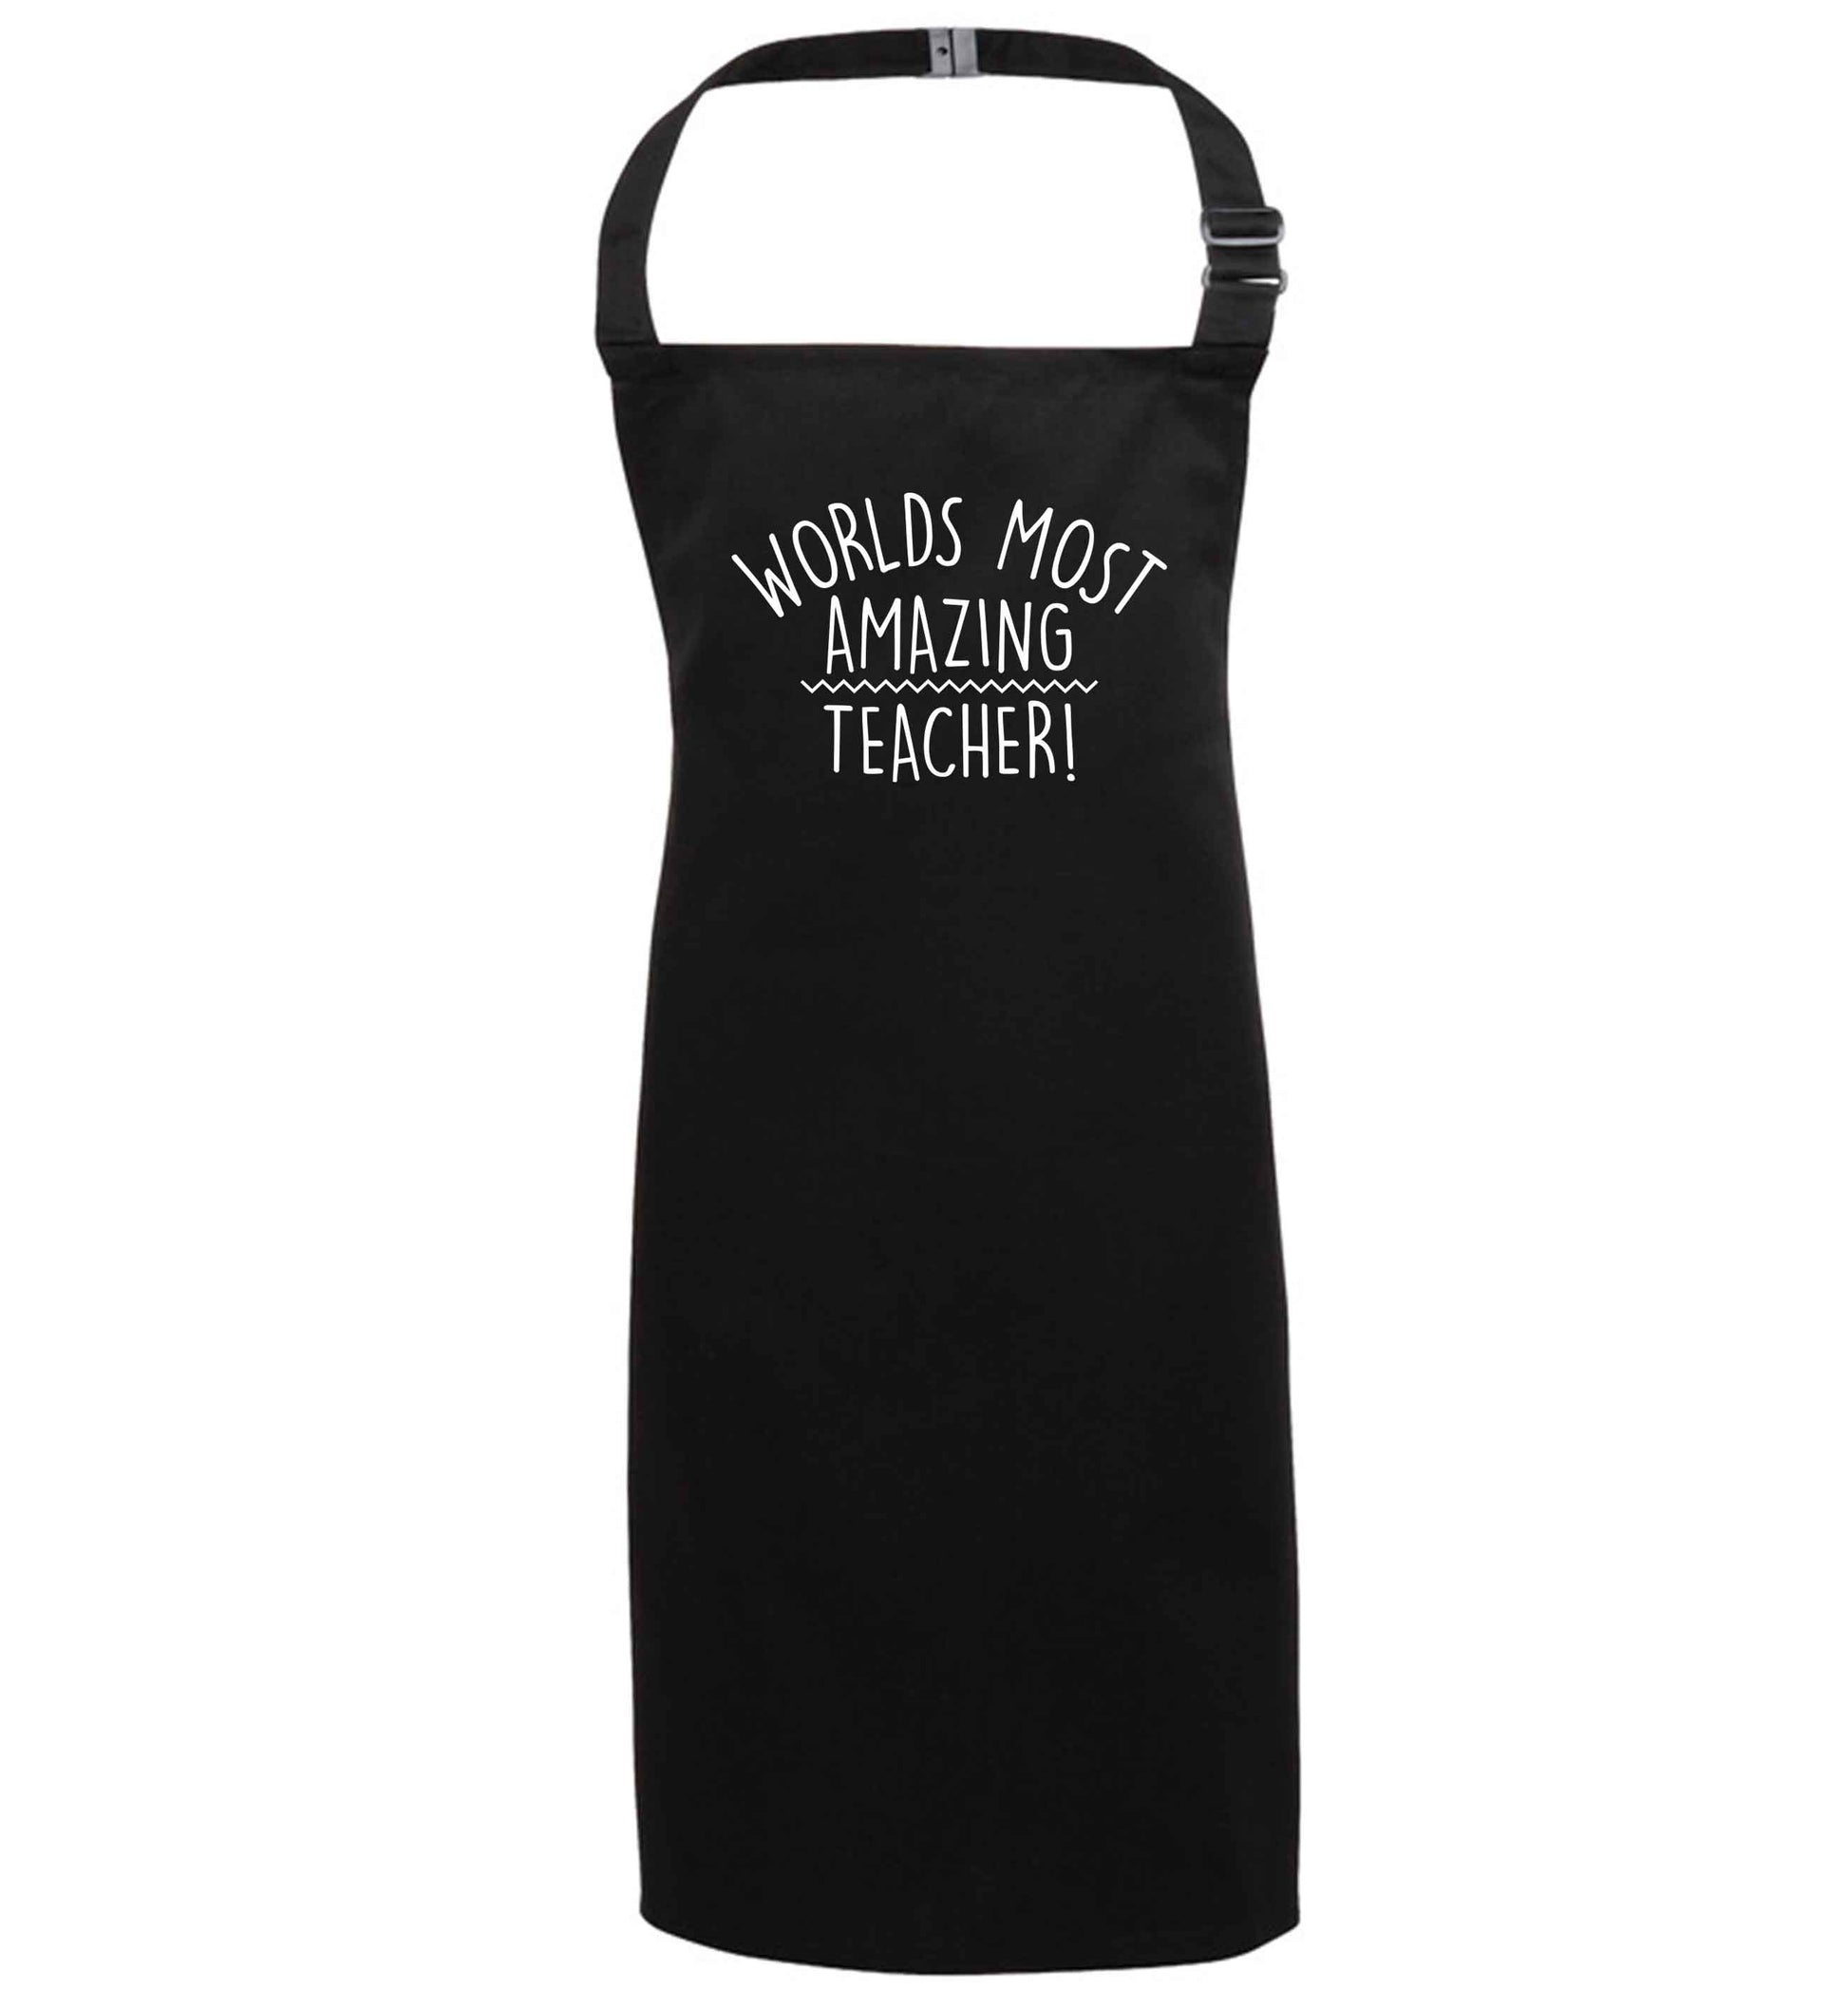 Worlds most amazing teacher black apron 7-10 years